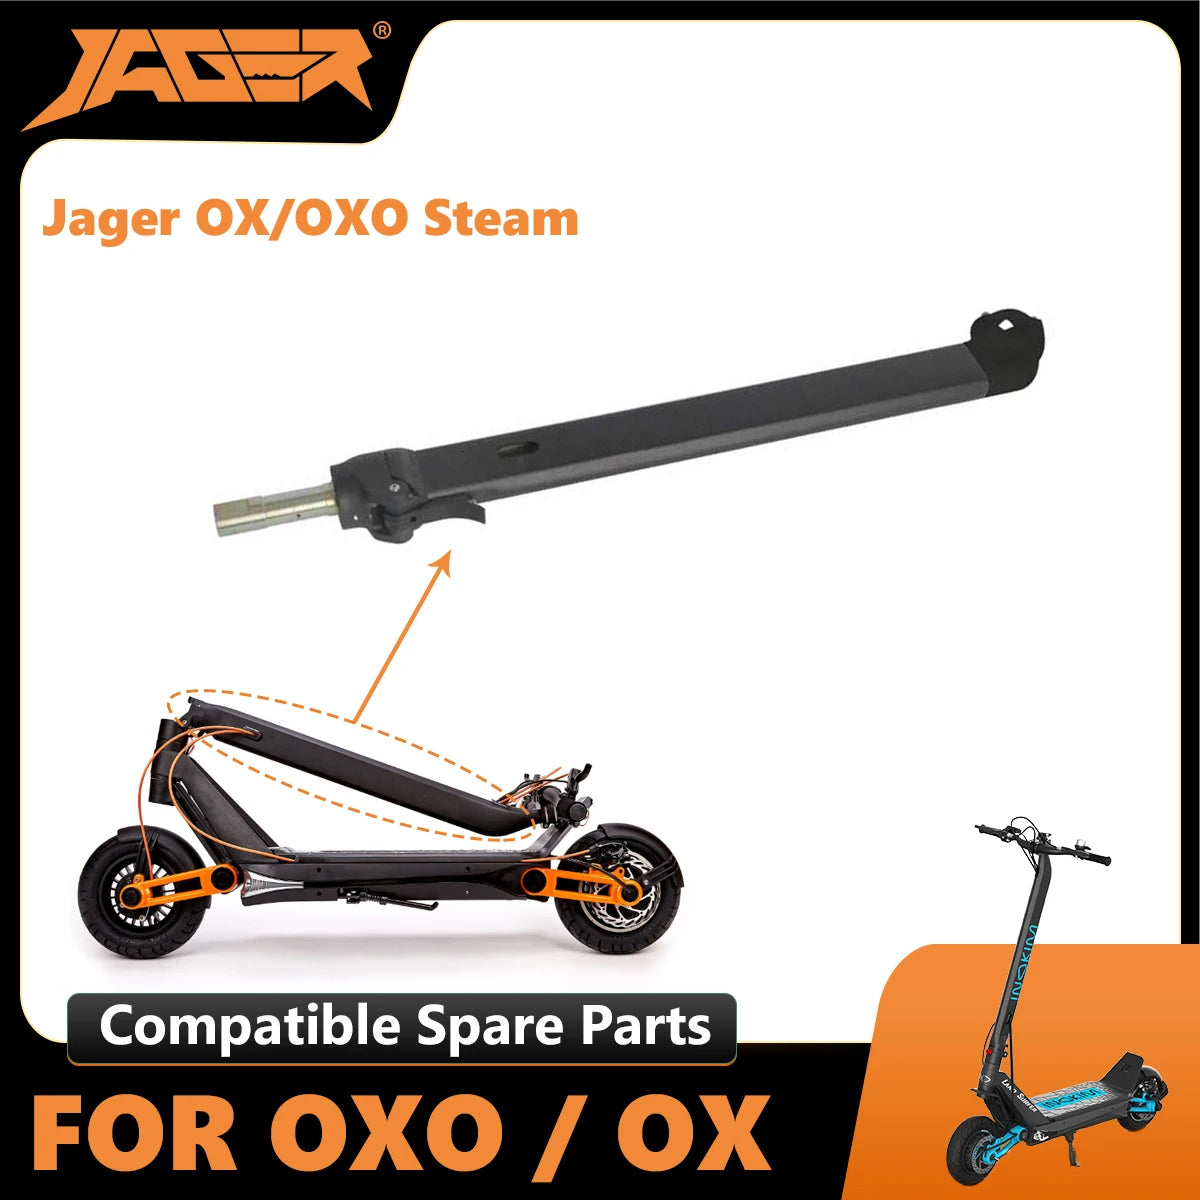 Jager steam compatible with Inokim OX/OXO best upgrade solution inokim parts accessories